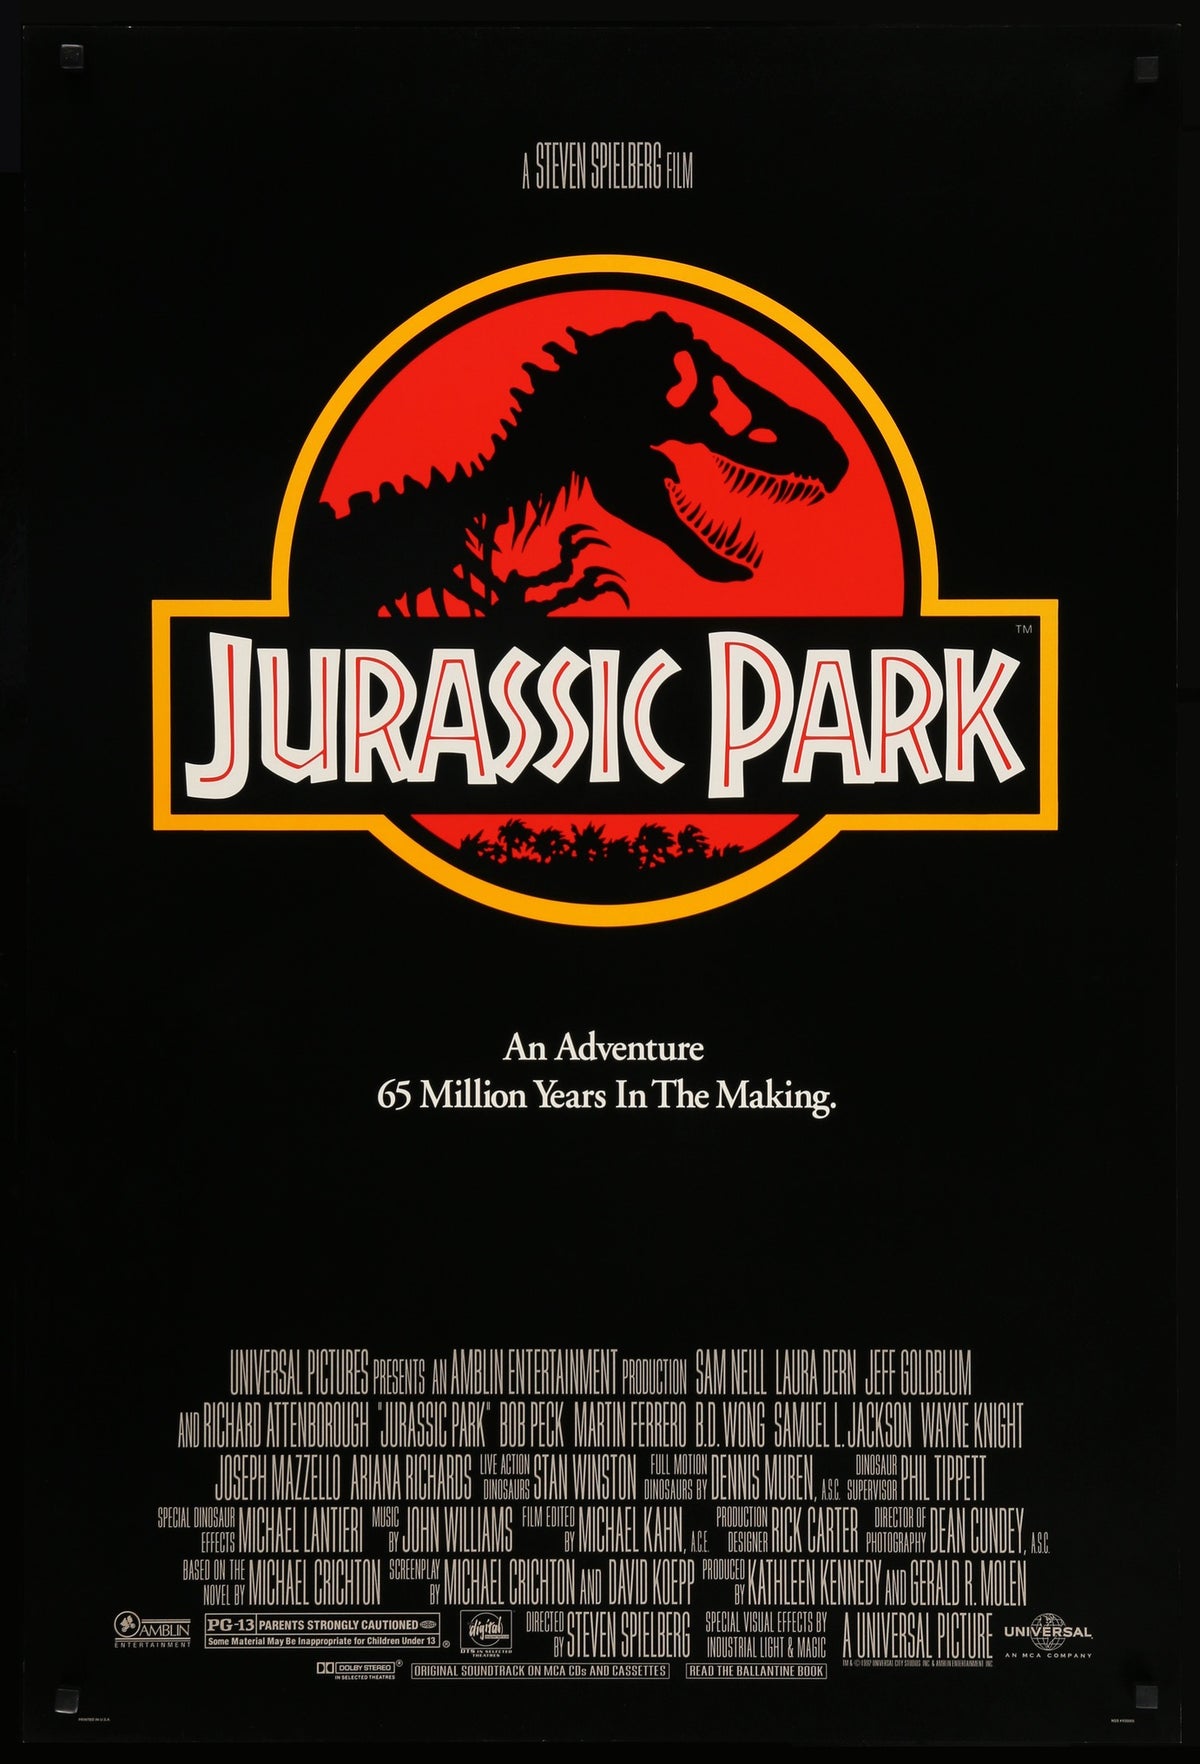 Jurassic Park (1993) original movie poster for sale at Original Film Art